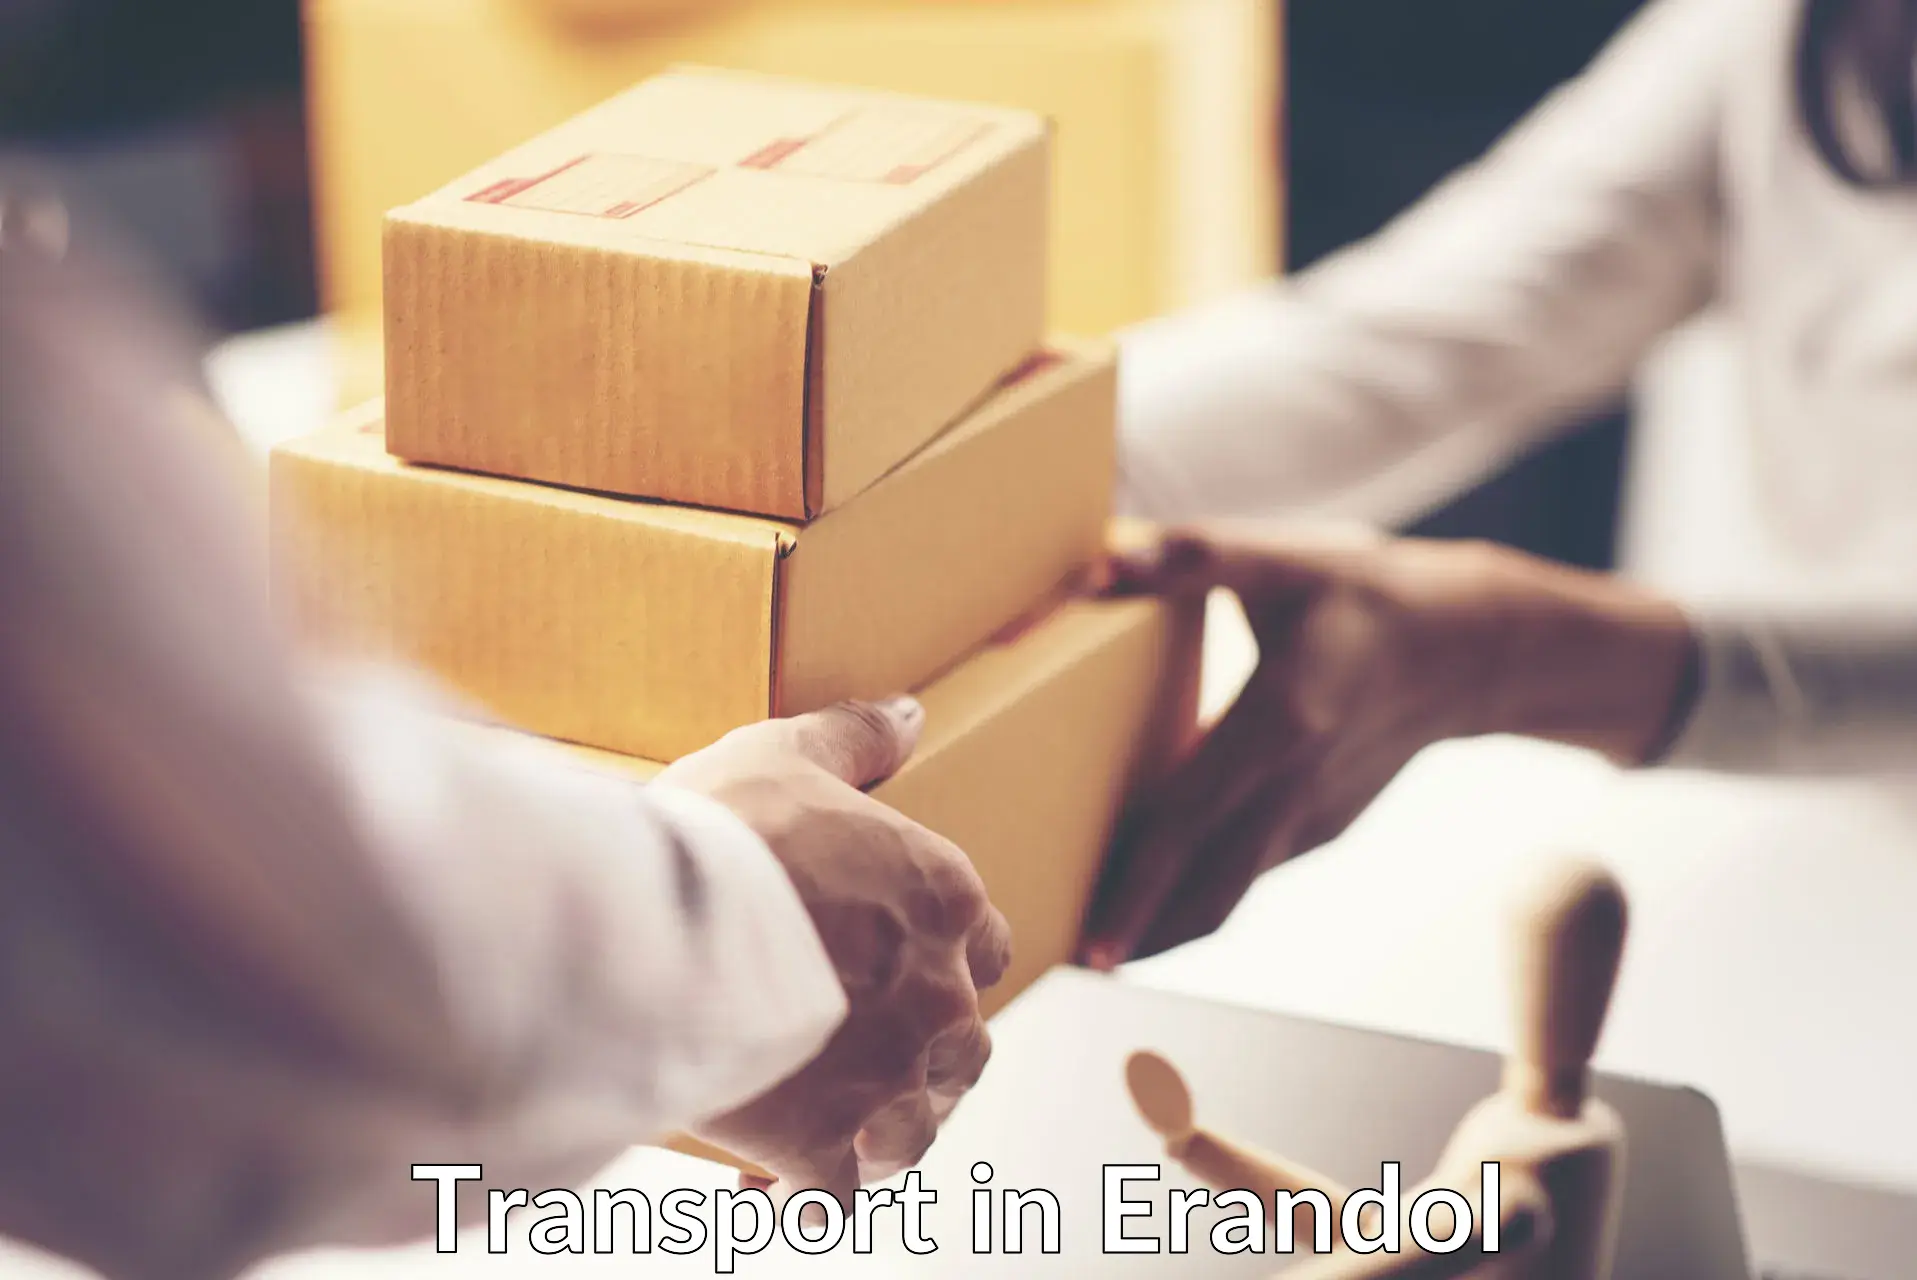 Shipping services in Erandol